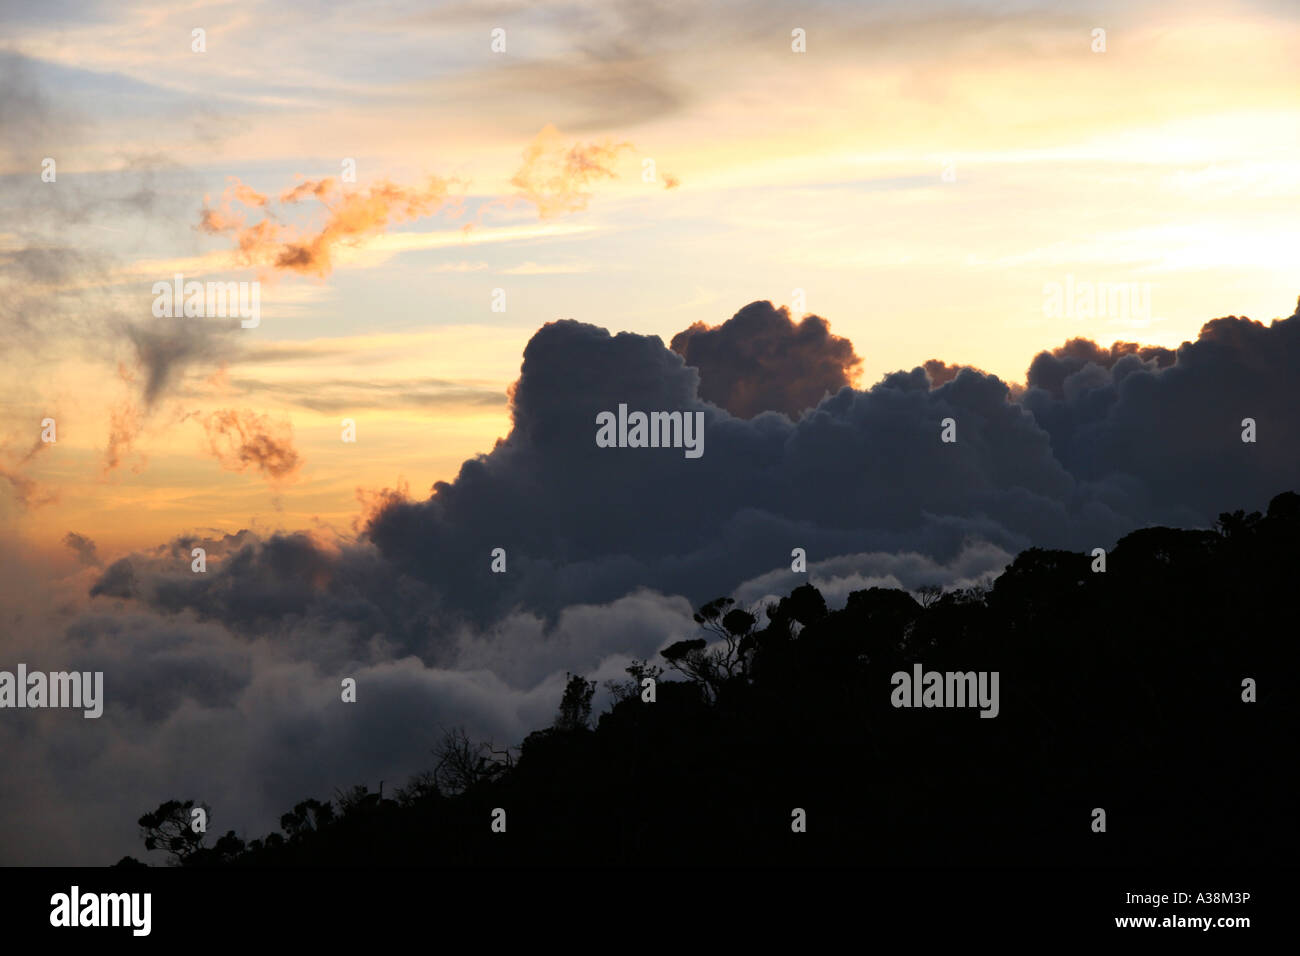 Tramonto da Labano Rata su Mt Kinabalu, a 4095m i più alti in Asia SE. Sabah, Borneo Malaysia Foto Stock